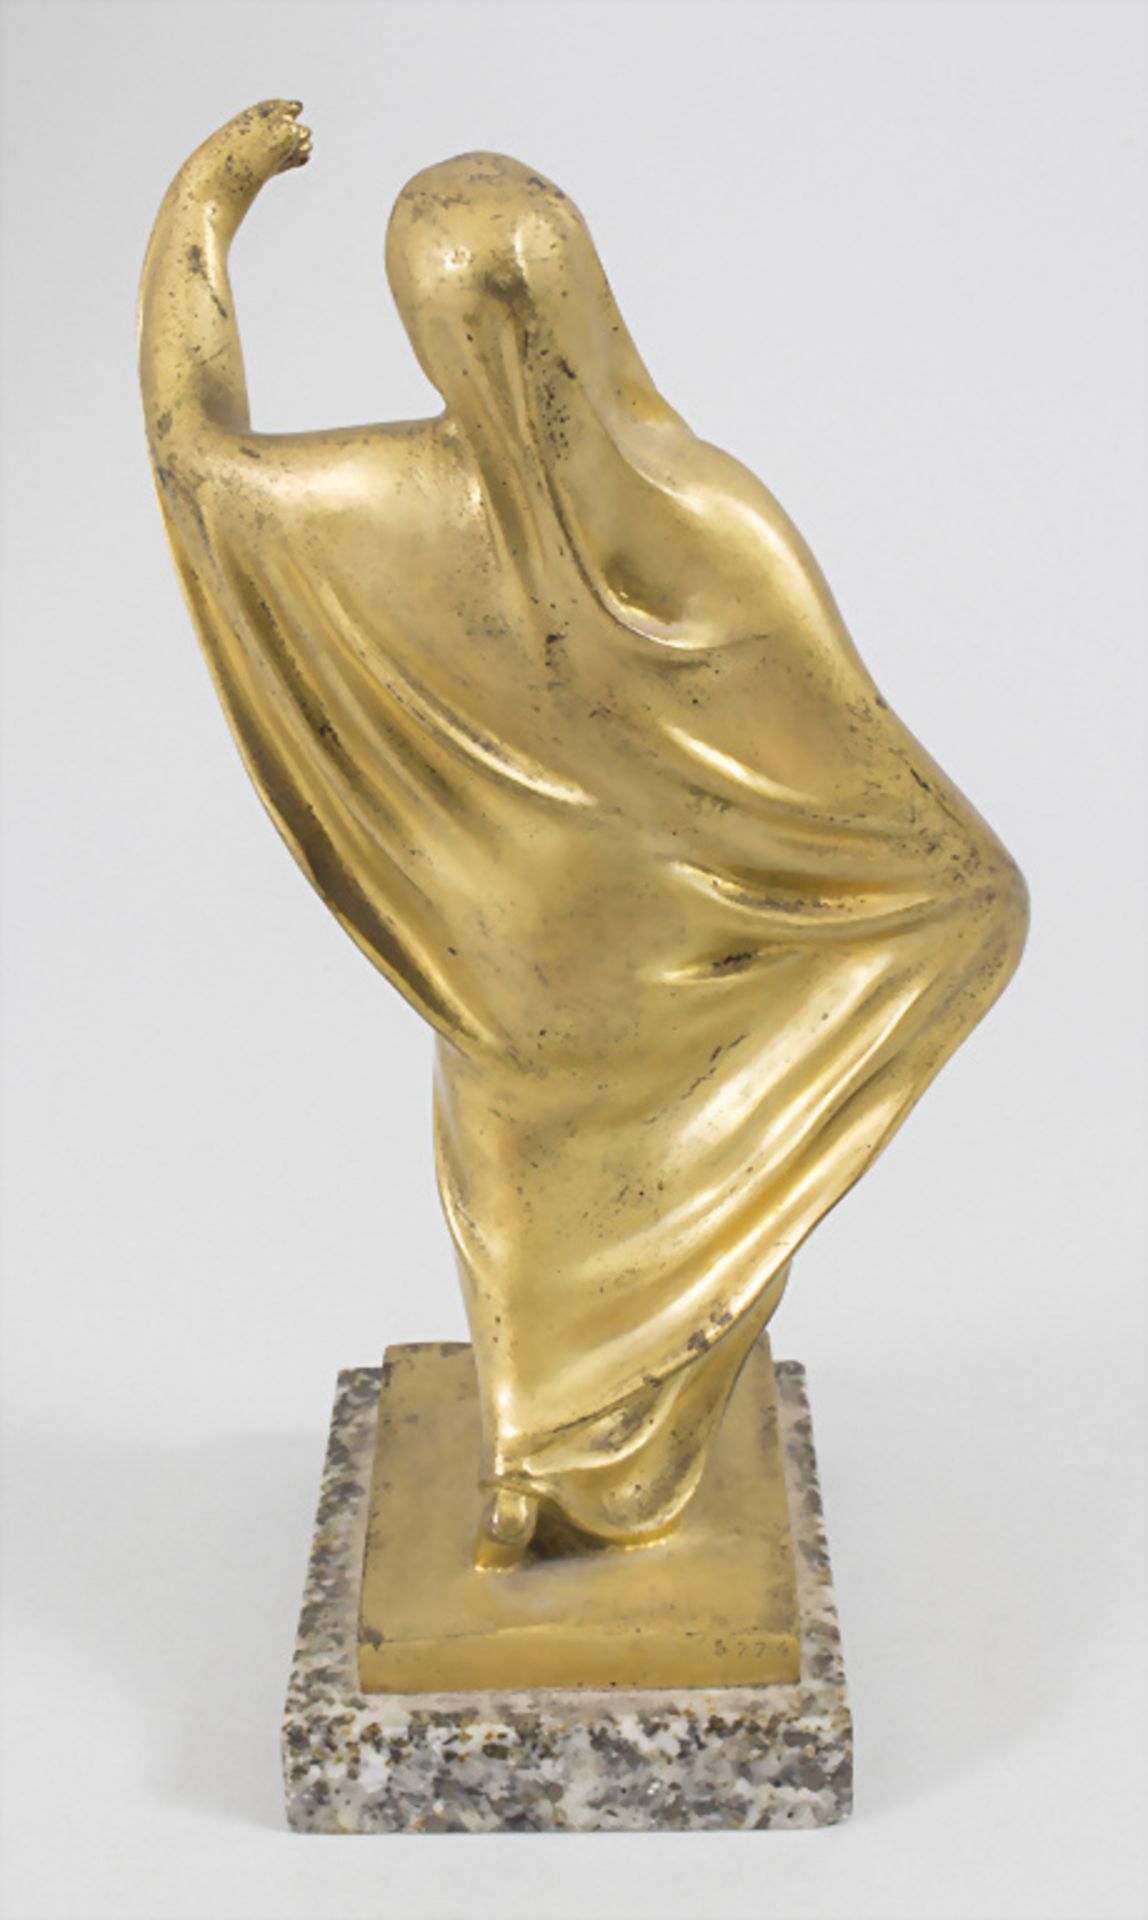 Jugendstil Bronze 'Tanagra Skulptur' / Tanagra sculpture en bronze à patine dorée / An Art ... - Bild 3 aus 7